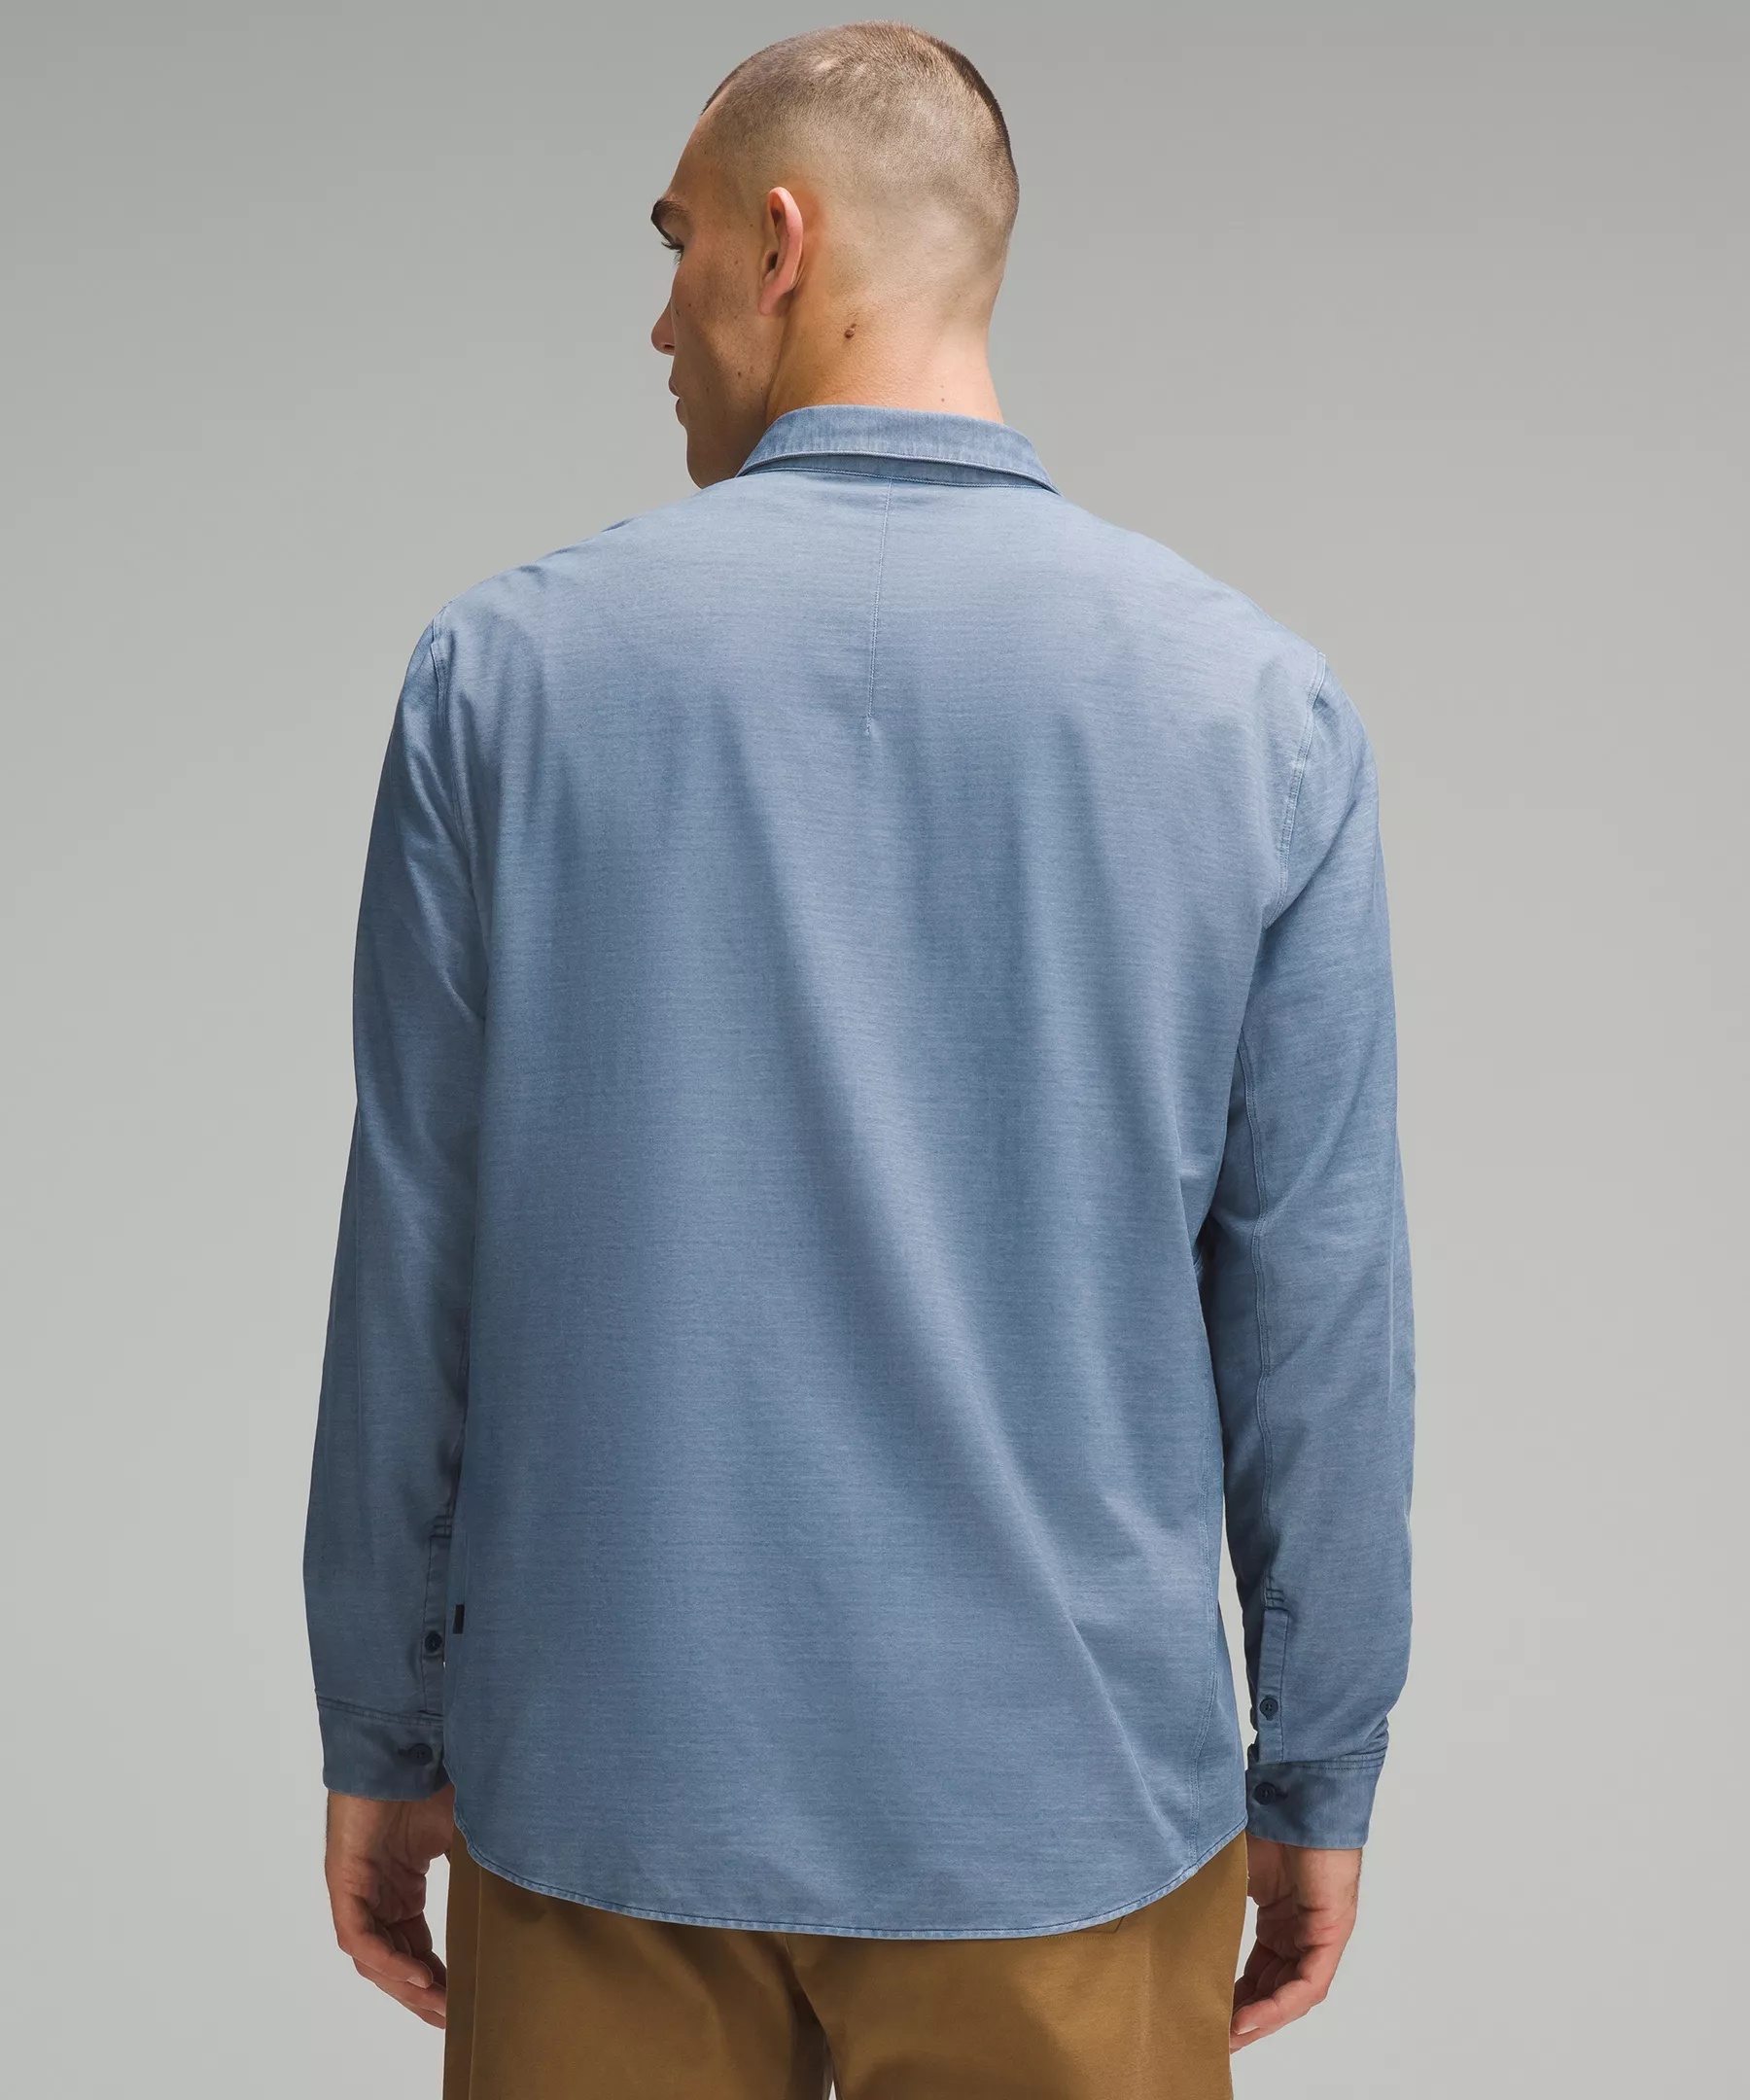 Commission Long-Sleeve Shirt - 3